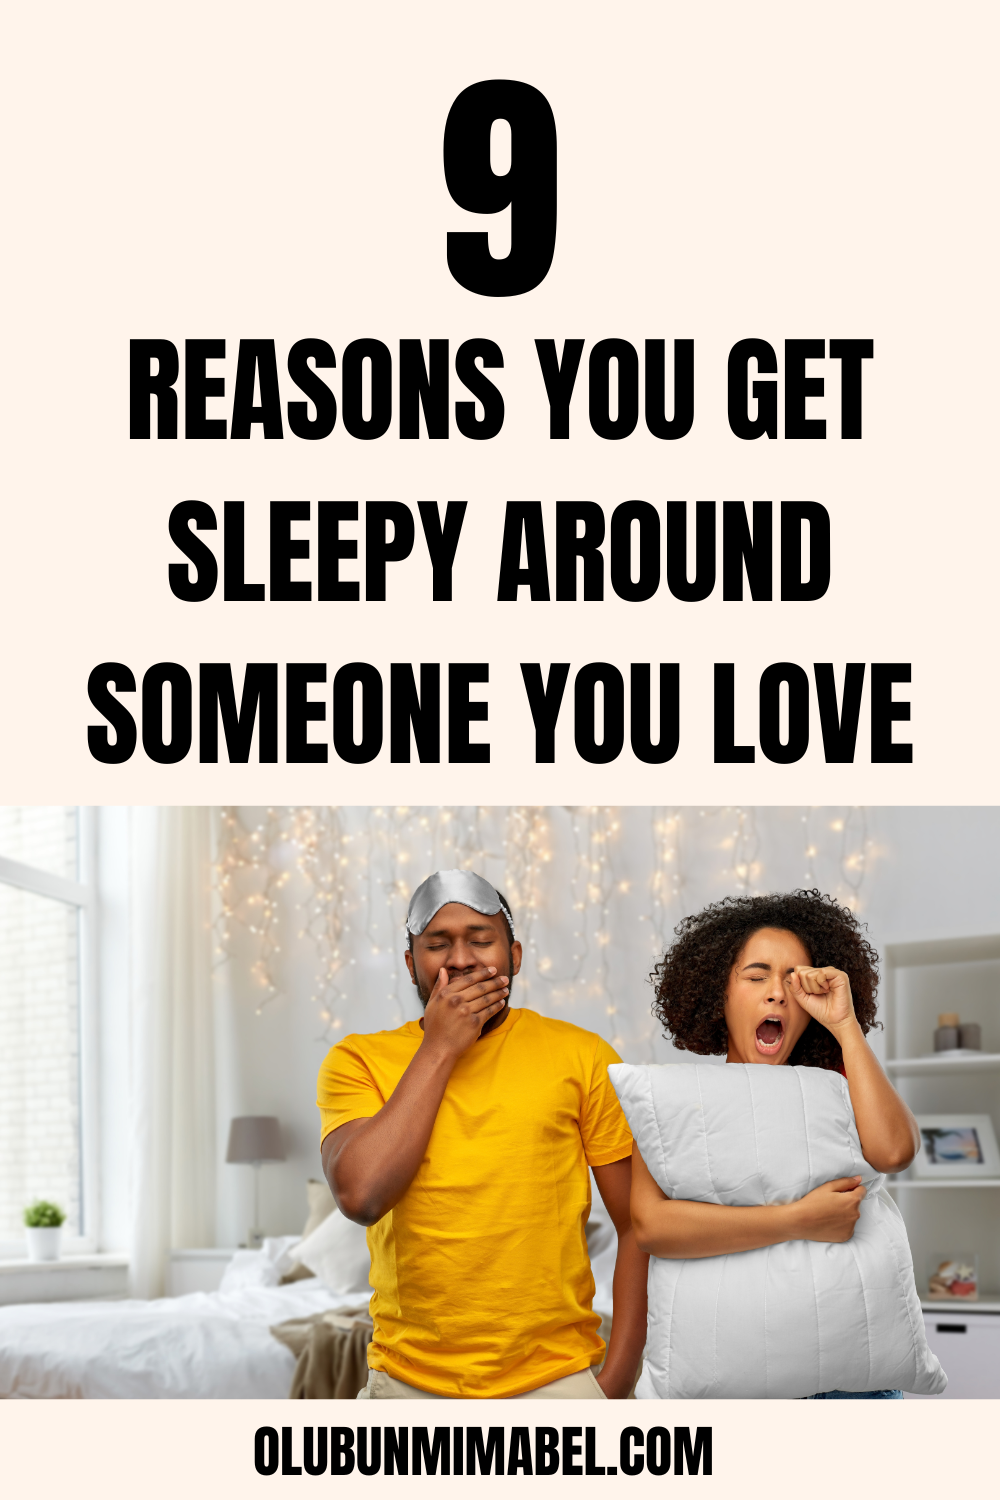 Why Do You Get Sleepy Around Someone You Love?